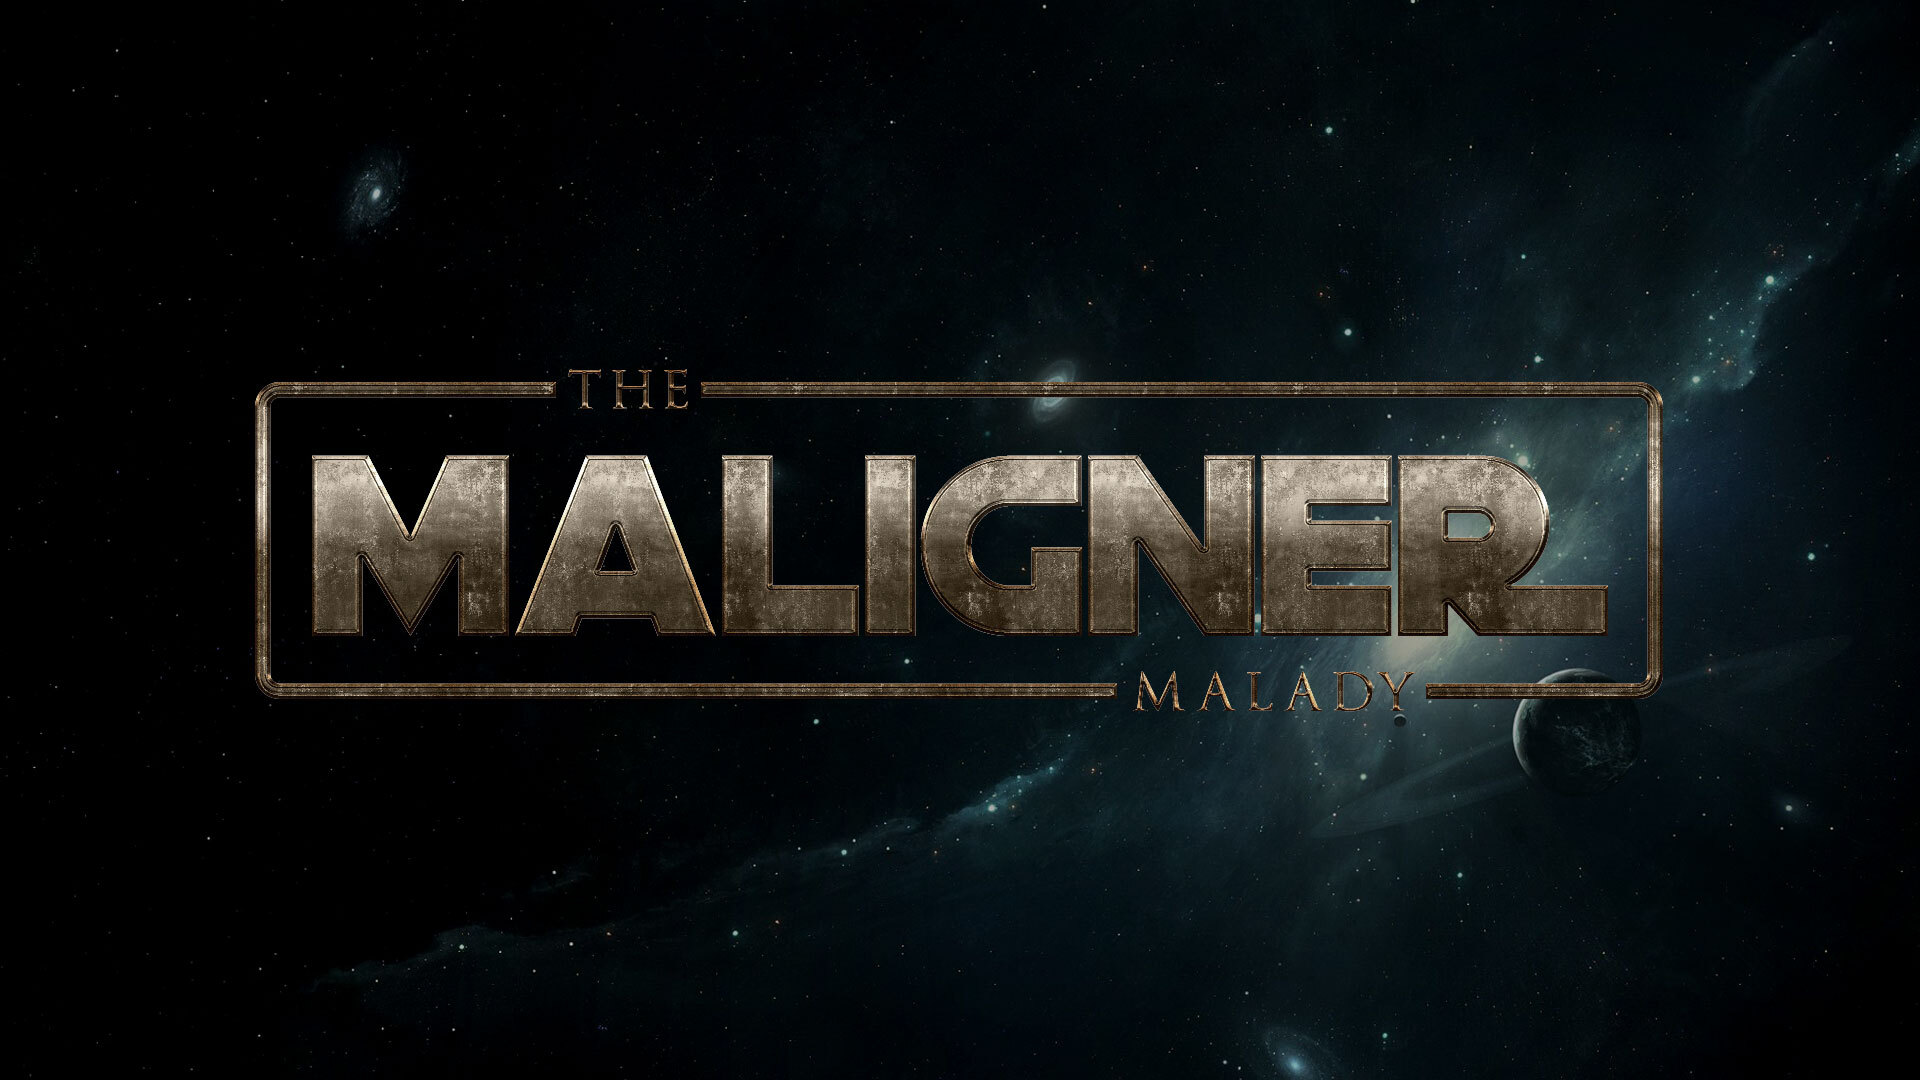 The Maligner Malady - Ps. Jurgen Matthesius